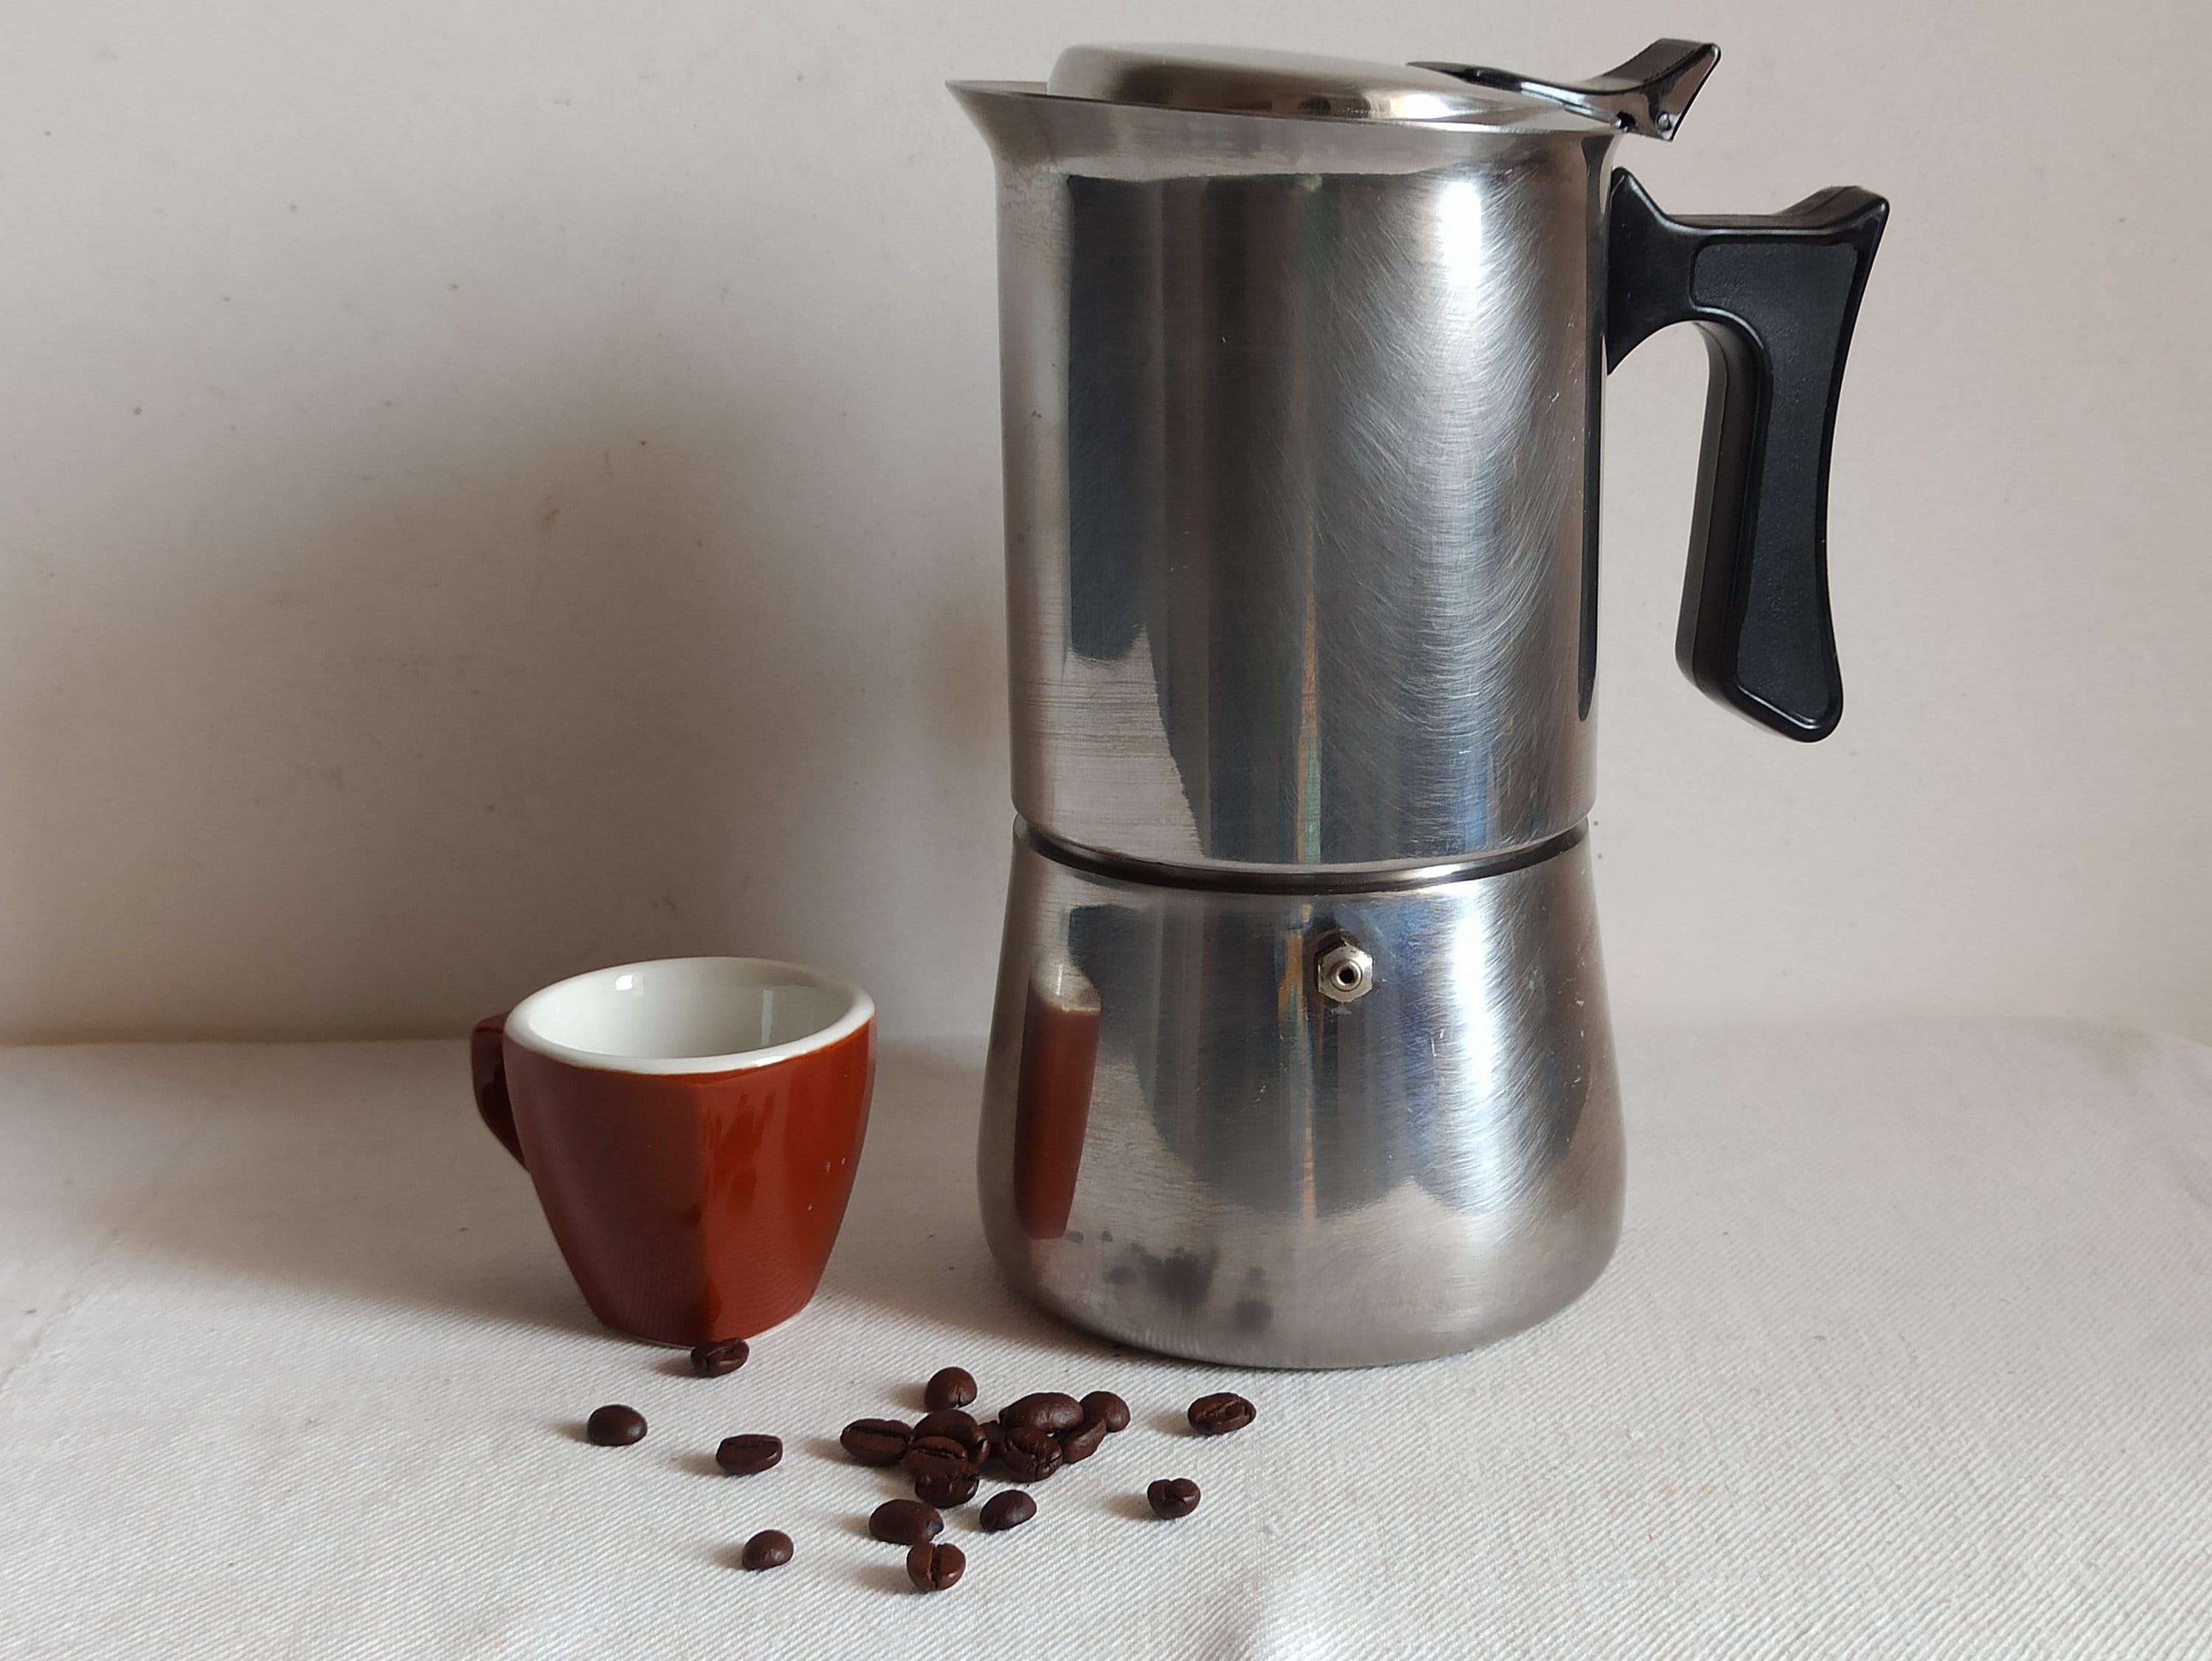 Vintage Coffee Maker, 2 Cups Coffee Maker, Small Coffee Maker, Espresso  Maker Labeled moka Imperia, Mini Express Stove Top Coffee Maker 